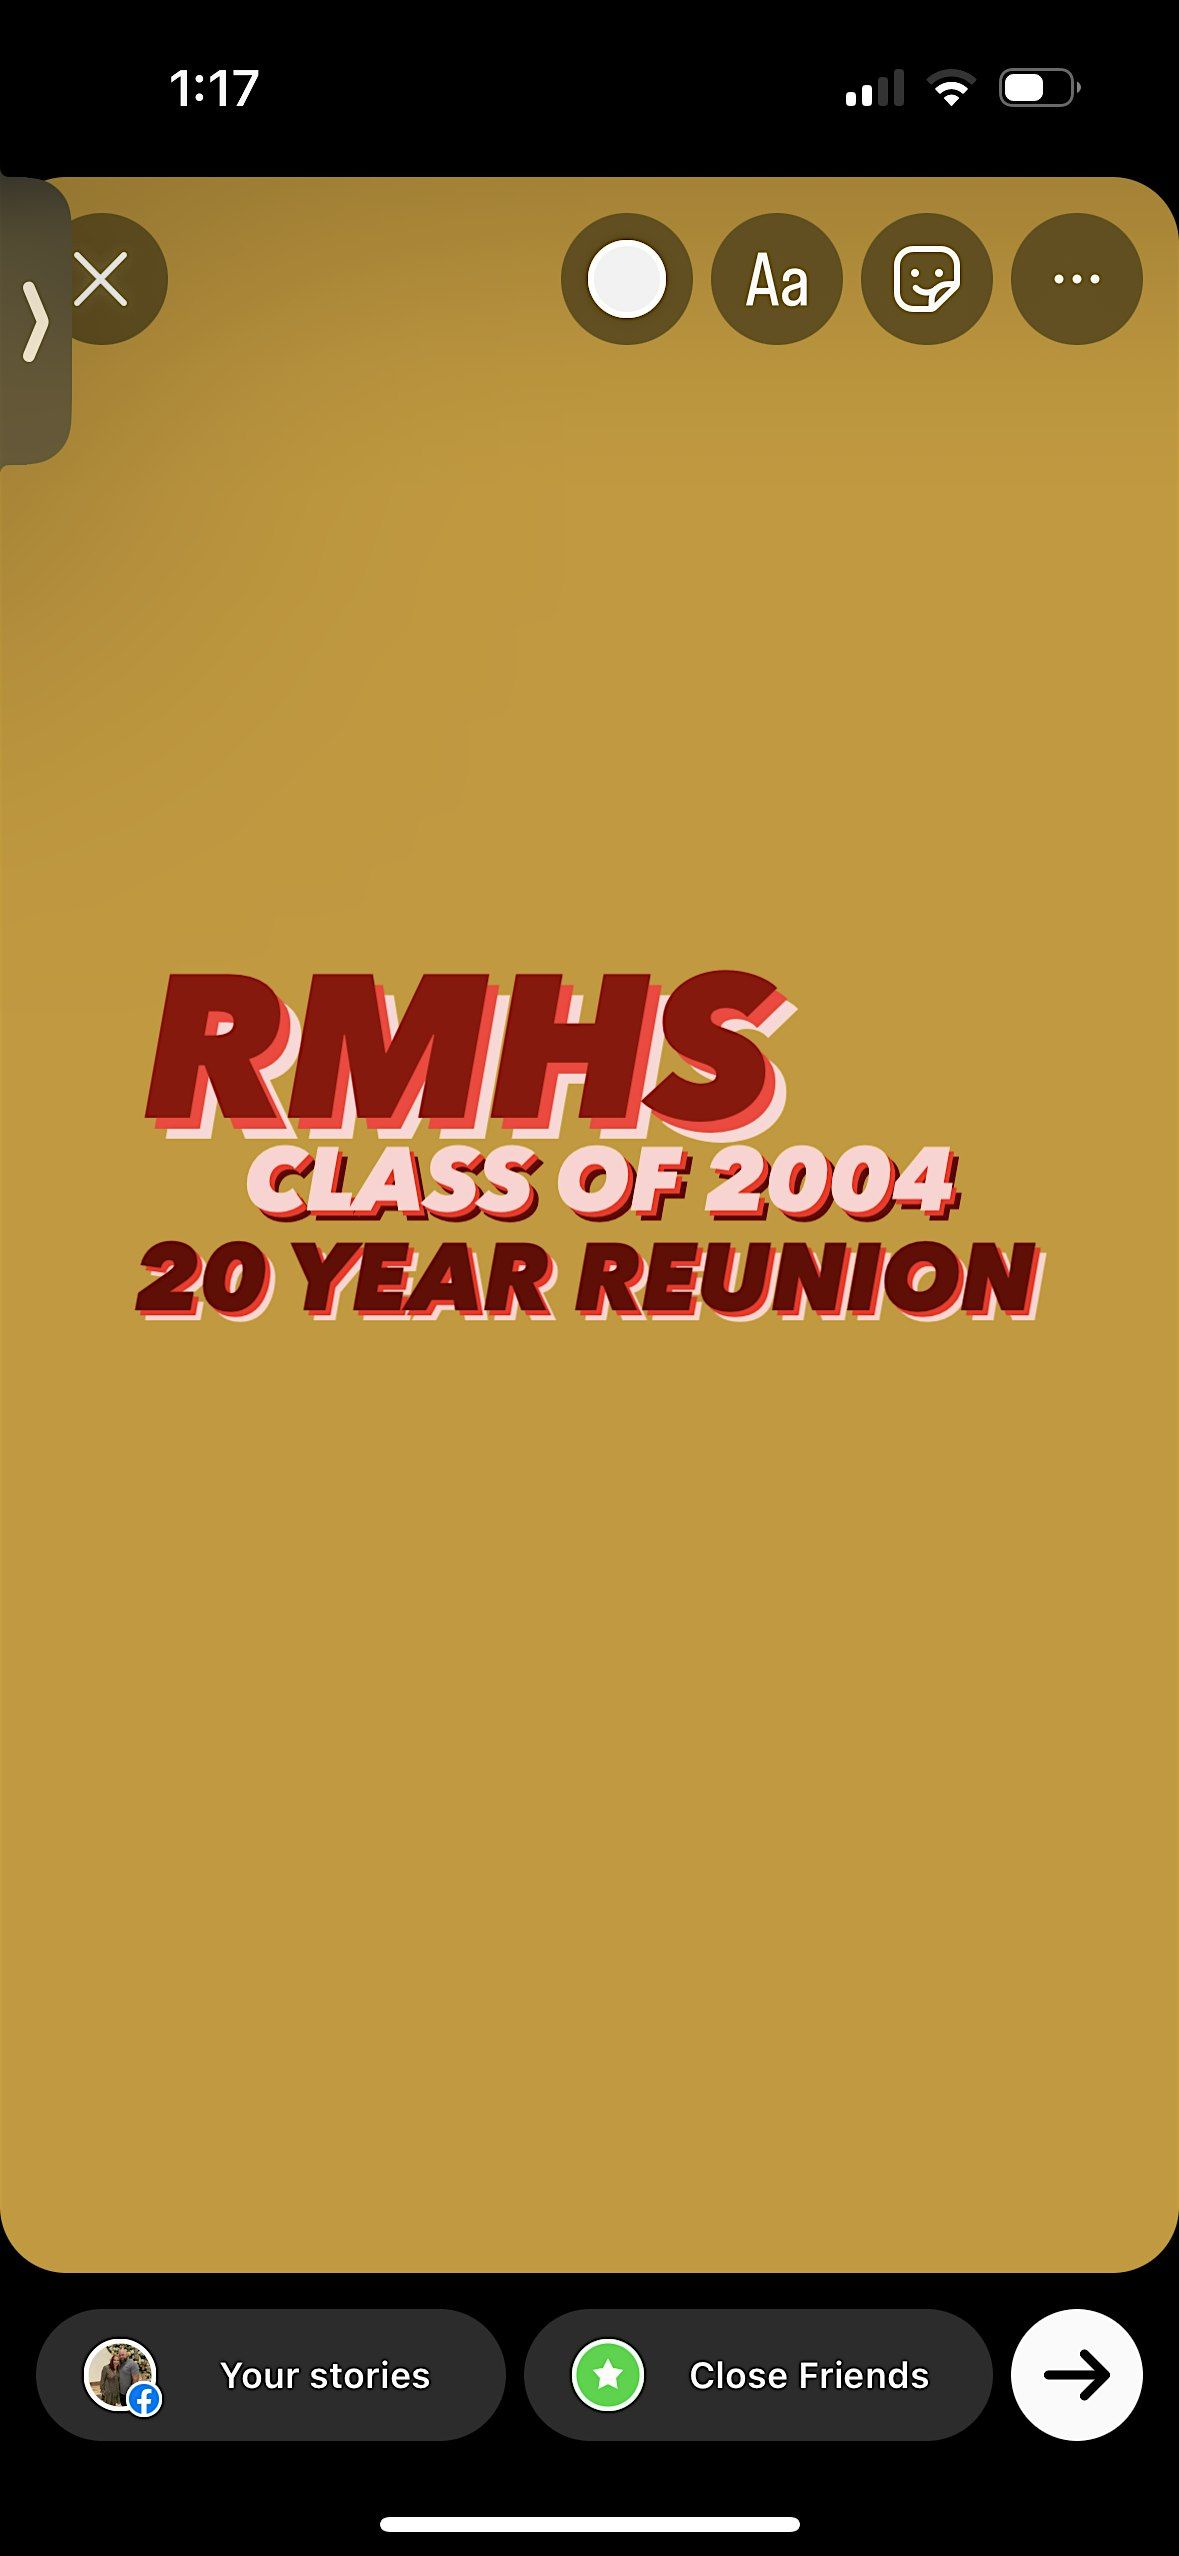 RMHS CLASS OF 2004 20 YEAR REUNION